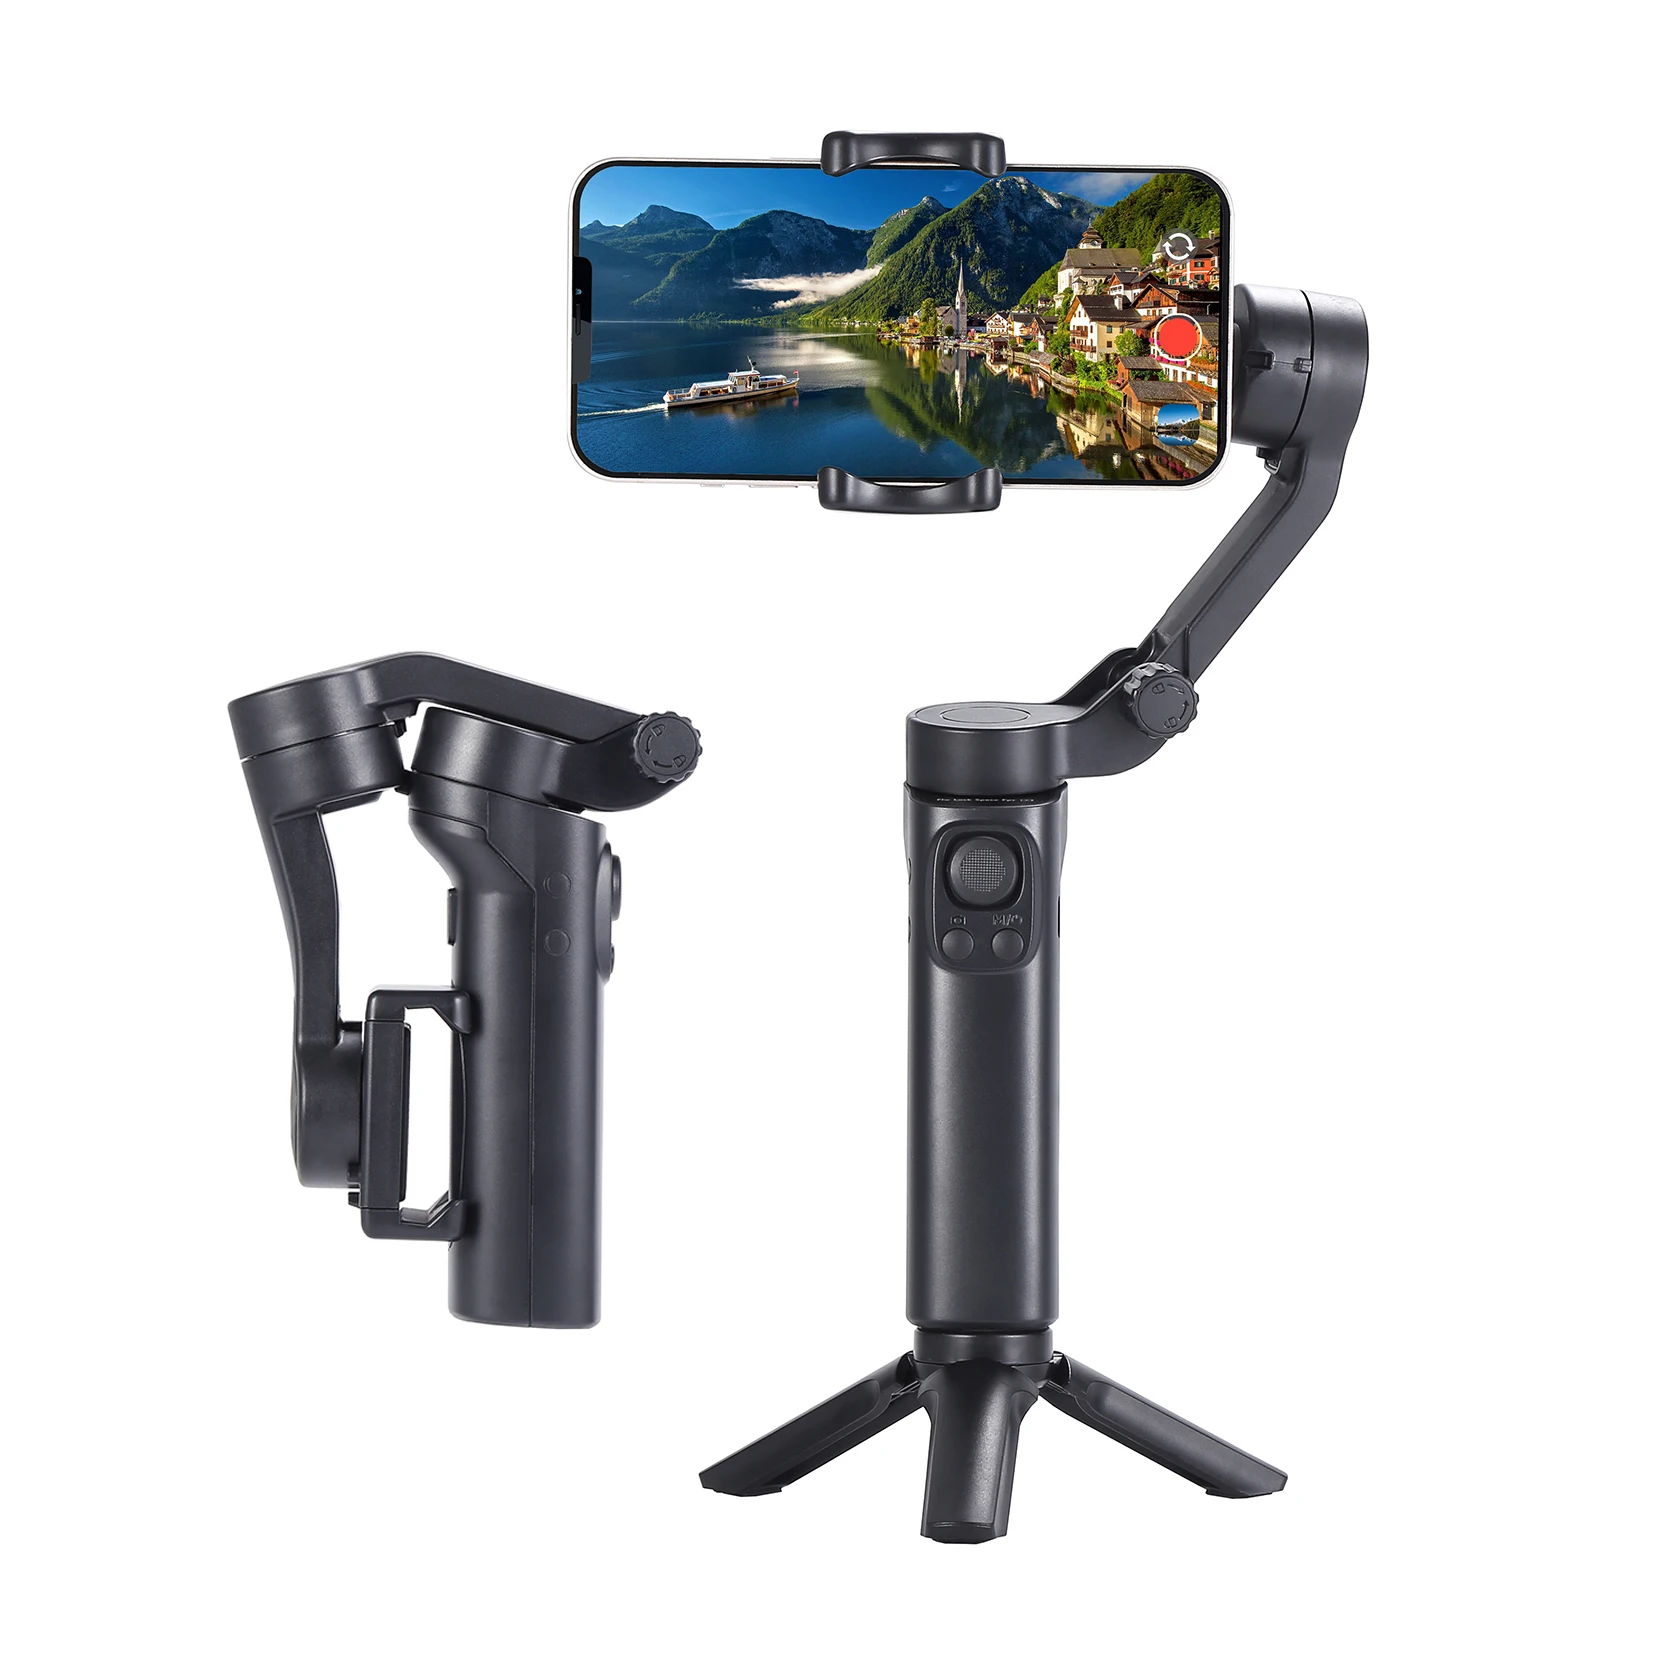 

Hot Sale Gimbal Stabilizer Tripod Selfie Stick 360 Rotation Handheld Anti-Shake Selfie Video Folded Smartphone Stabilizer